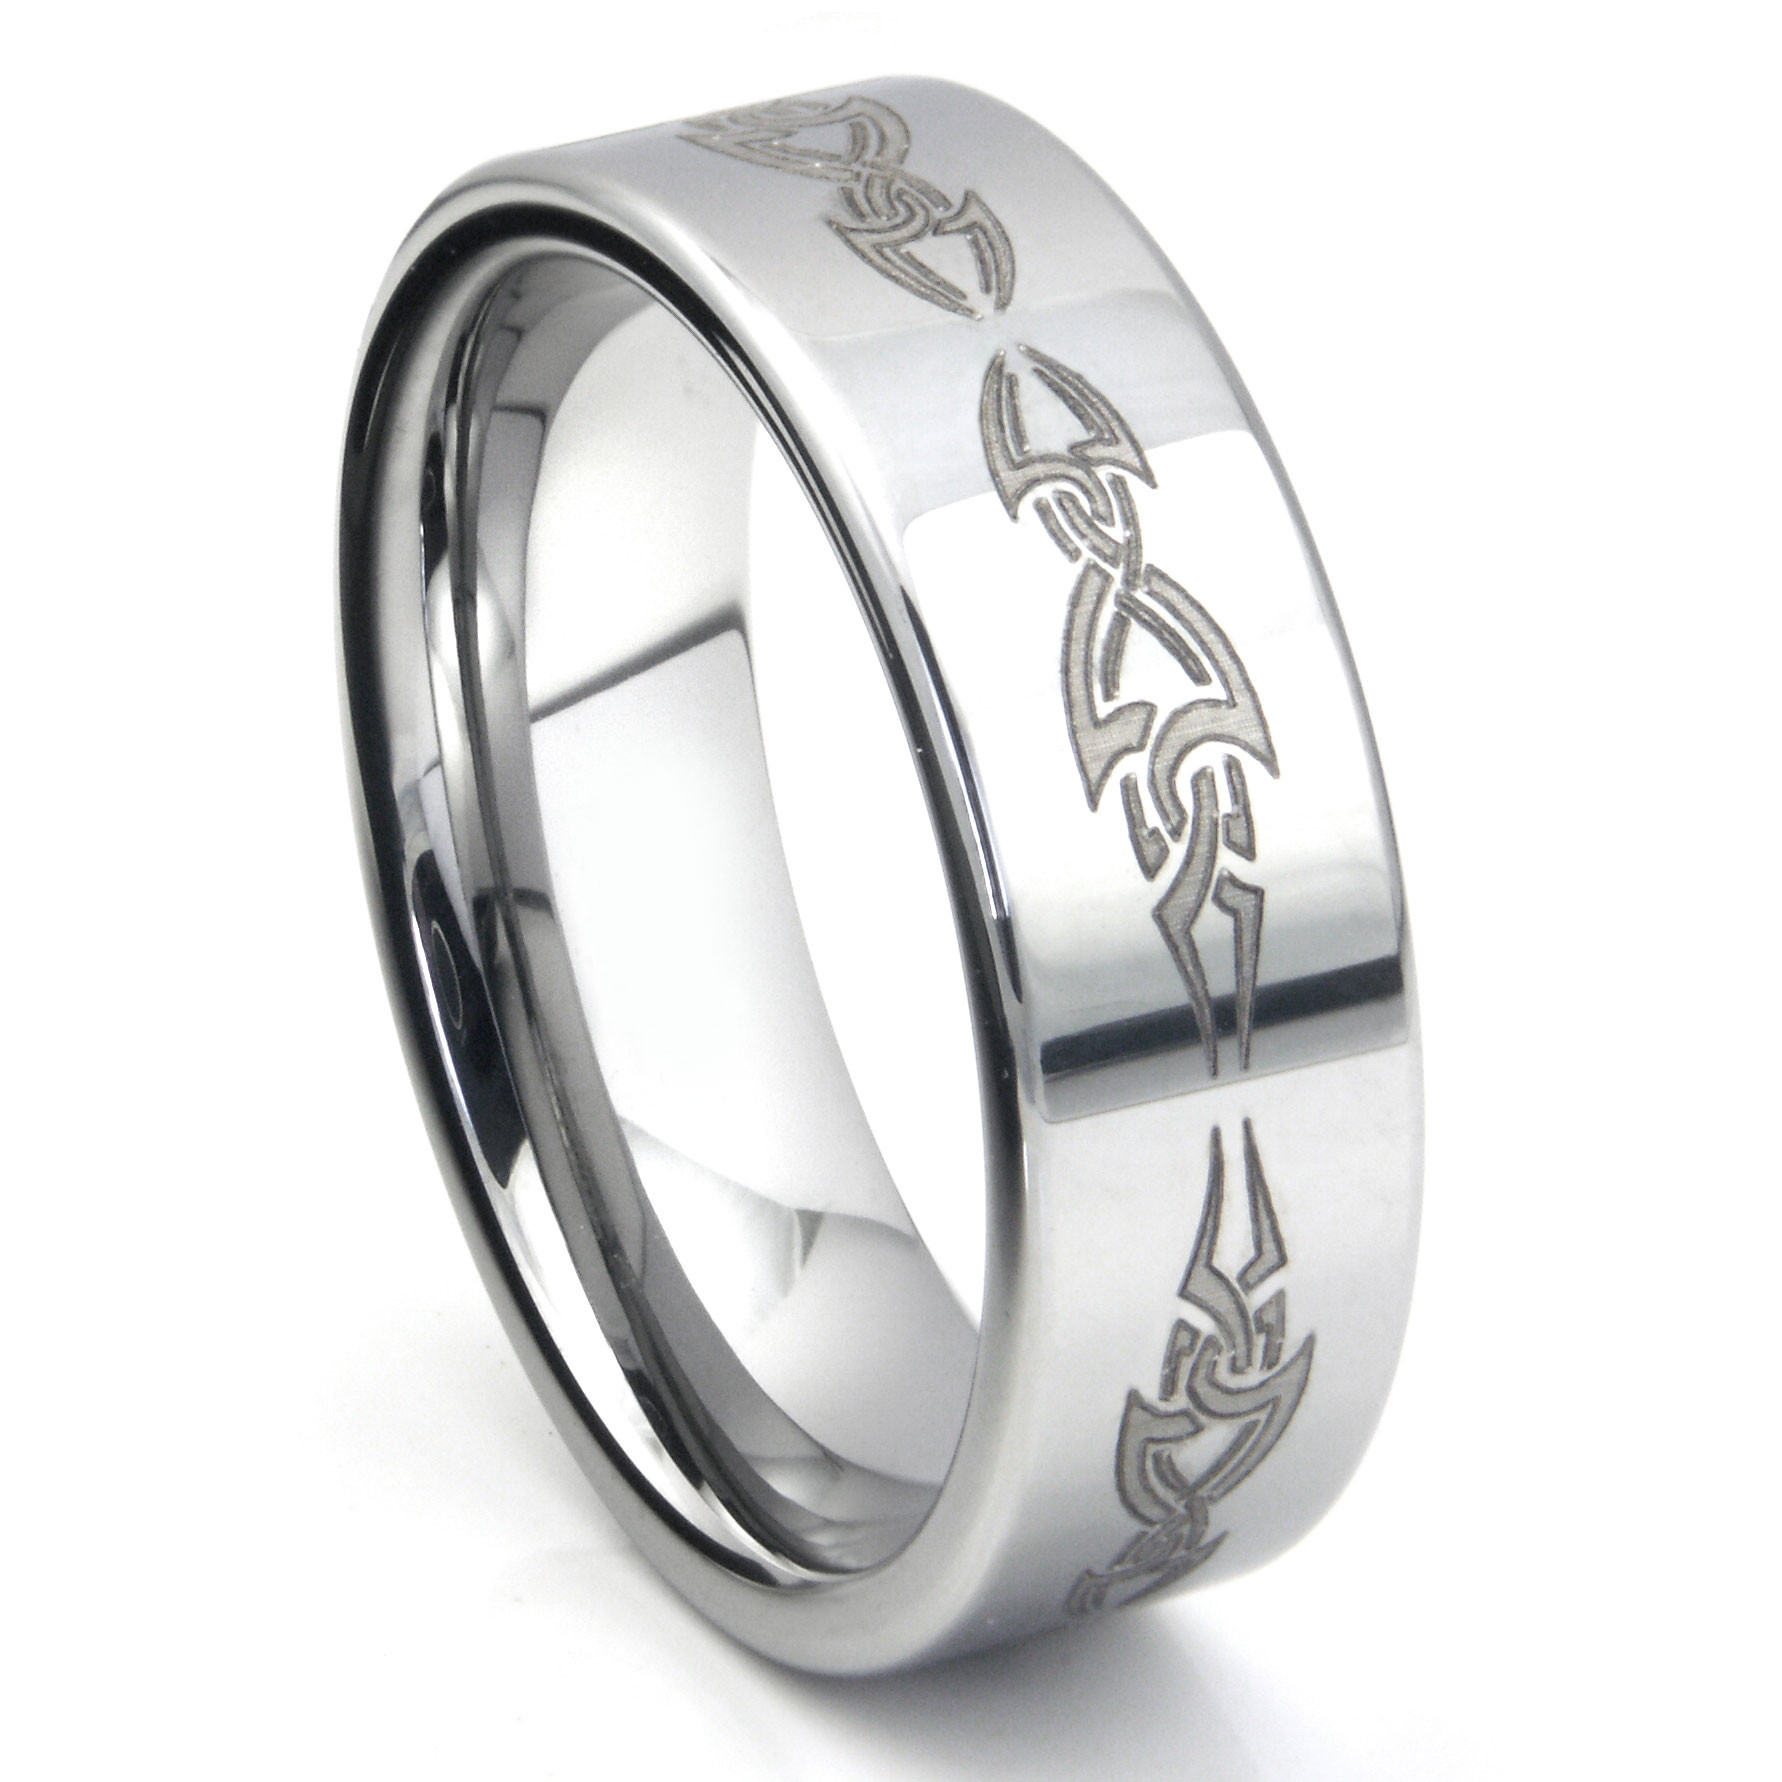 Tribal Wedding Bands
 Tungsten Carbide Laser Engraved Tribal Wedding Band Ring